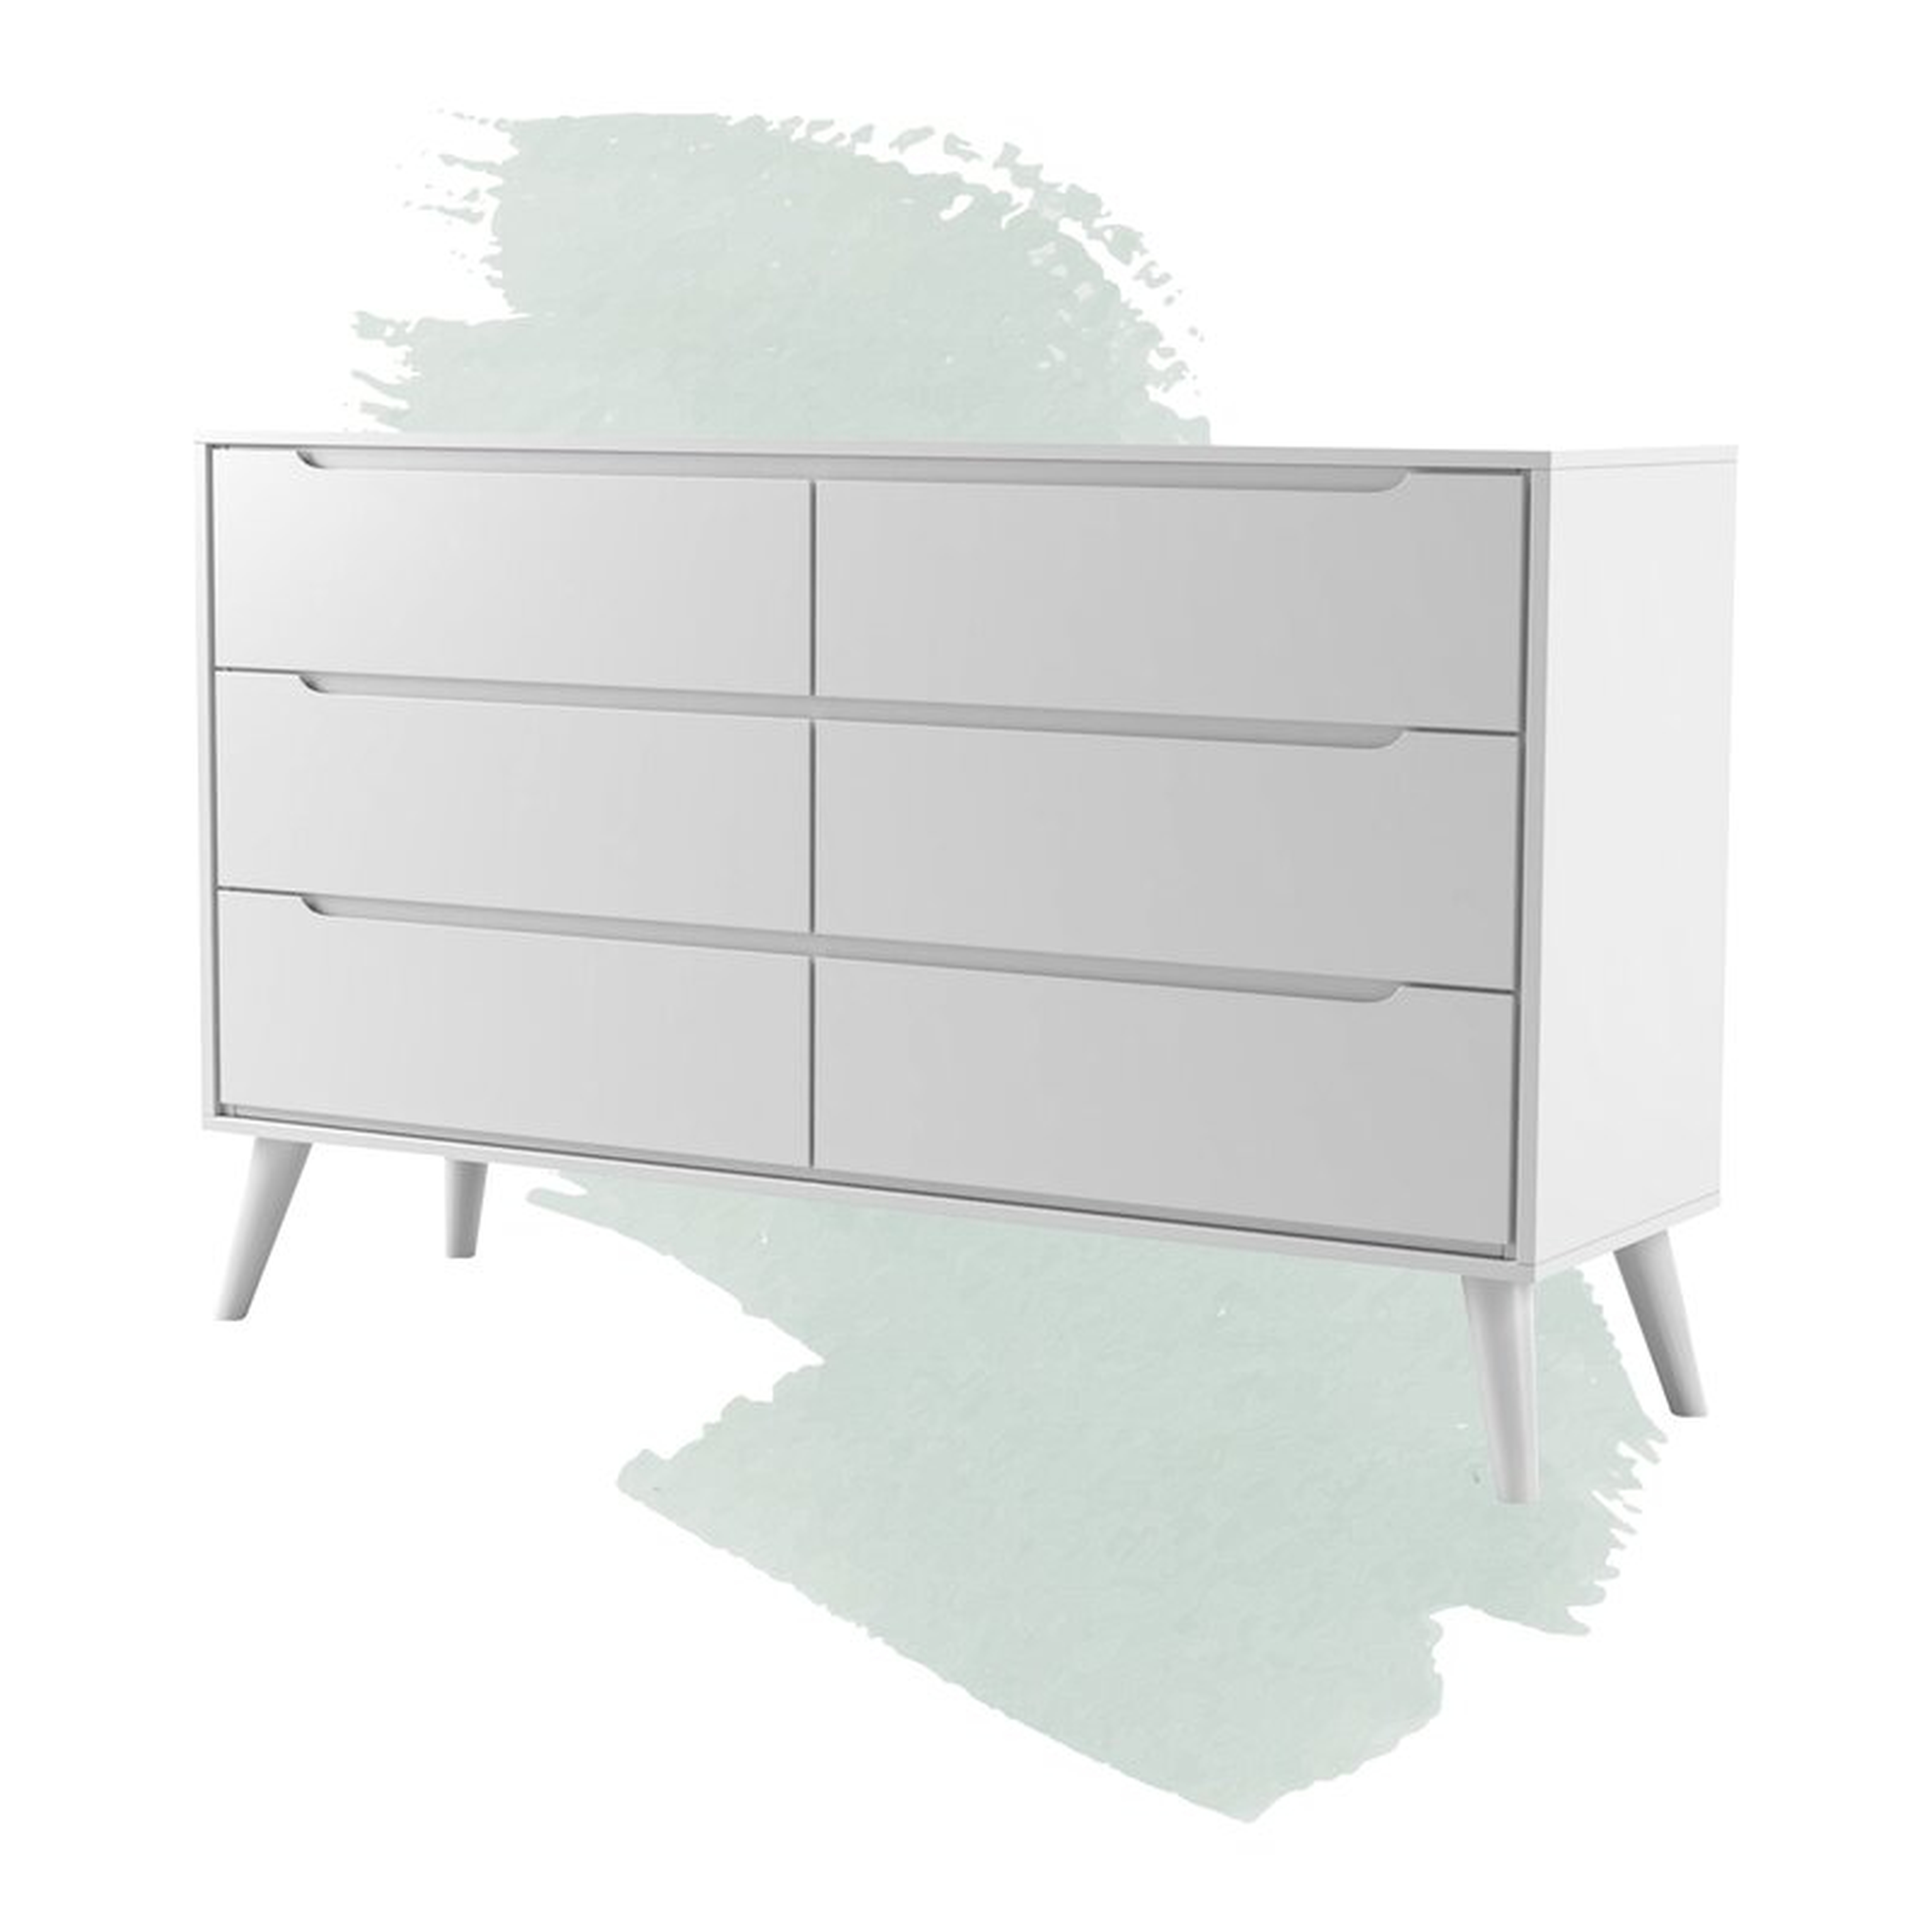 Staton 6 Drawer Double Dresser - White - Wayfair